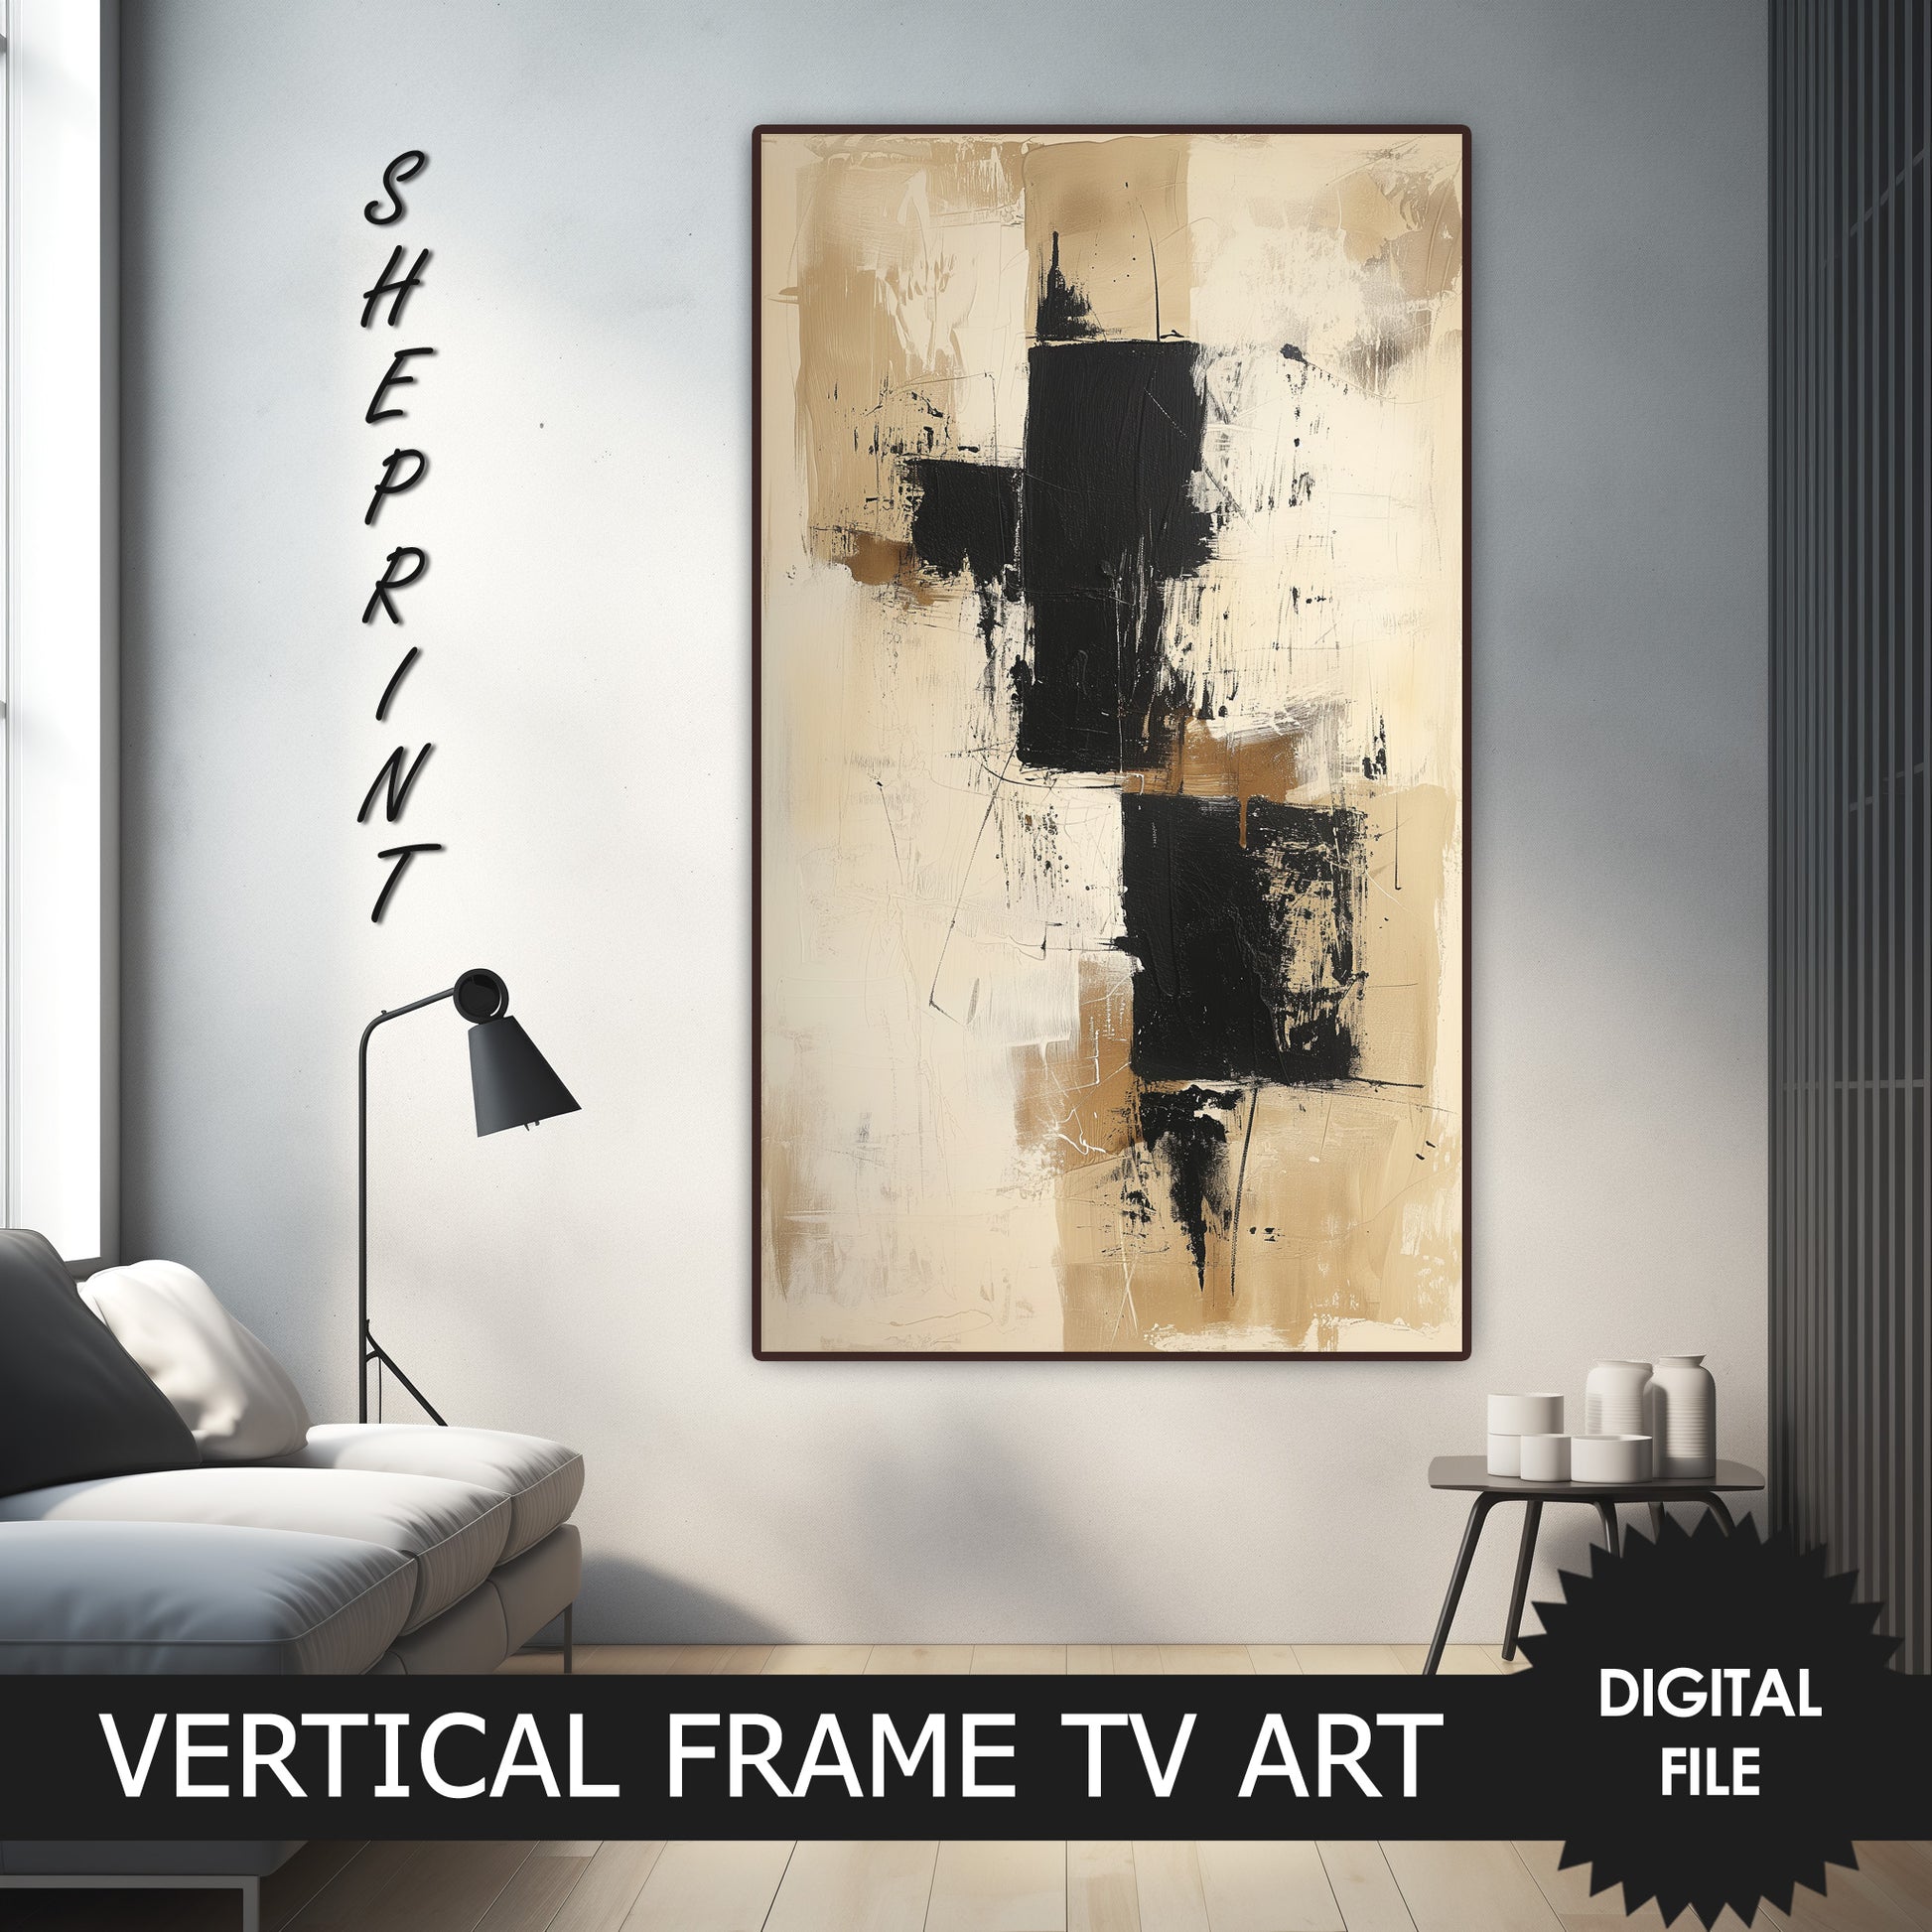 Vertical Frame TV Art, Beige Black Abstract Art, Neutral Tones art, preview on Samsung frame TV when mounted vertically